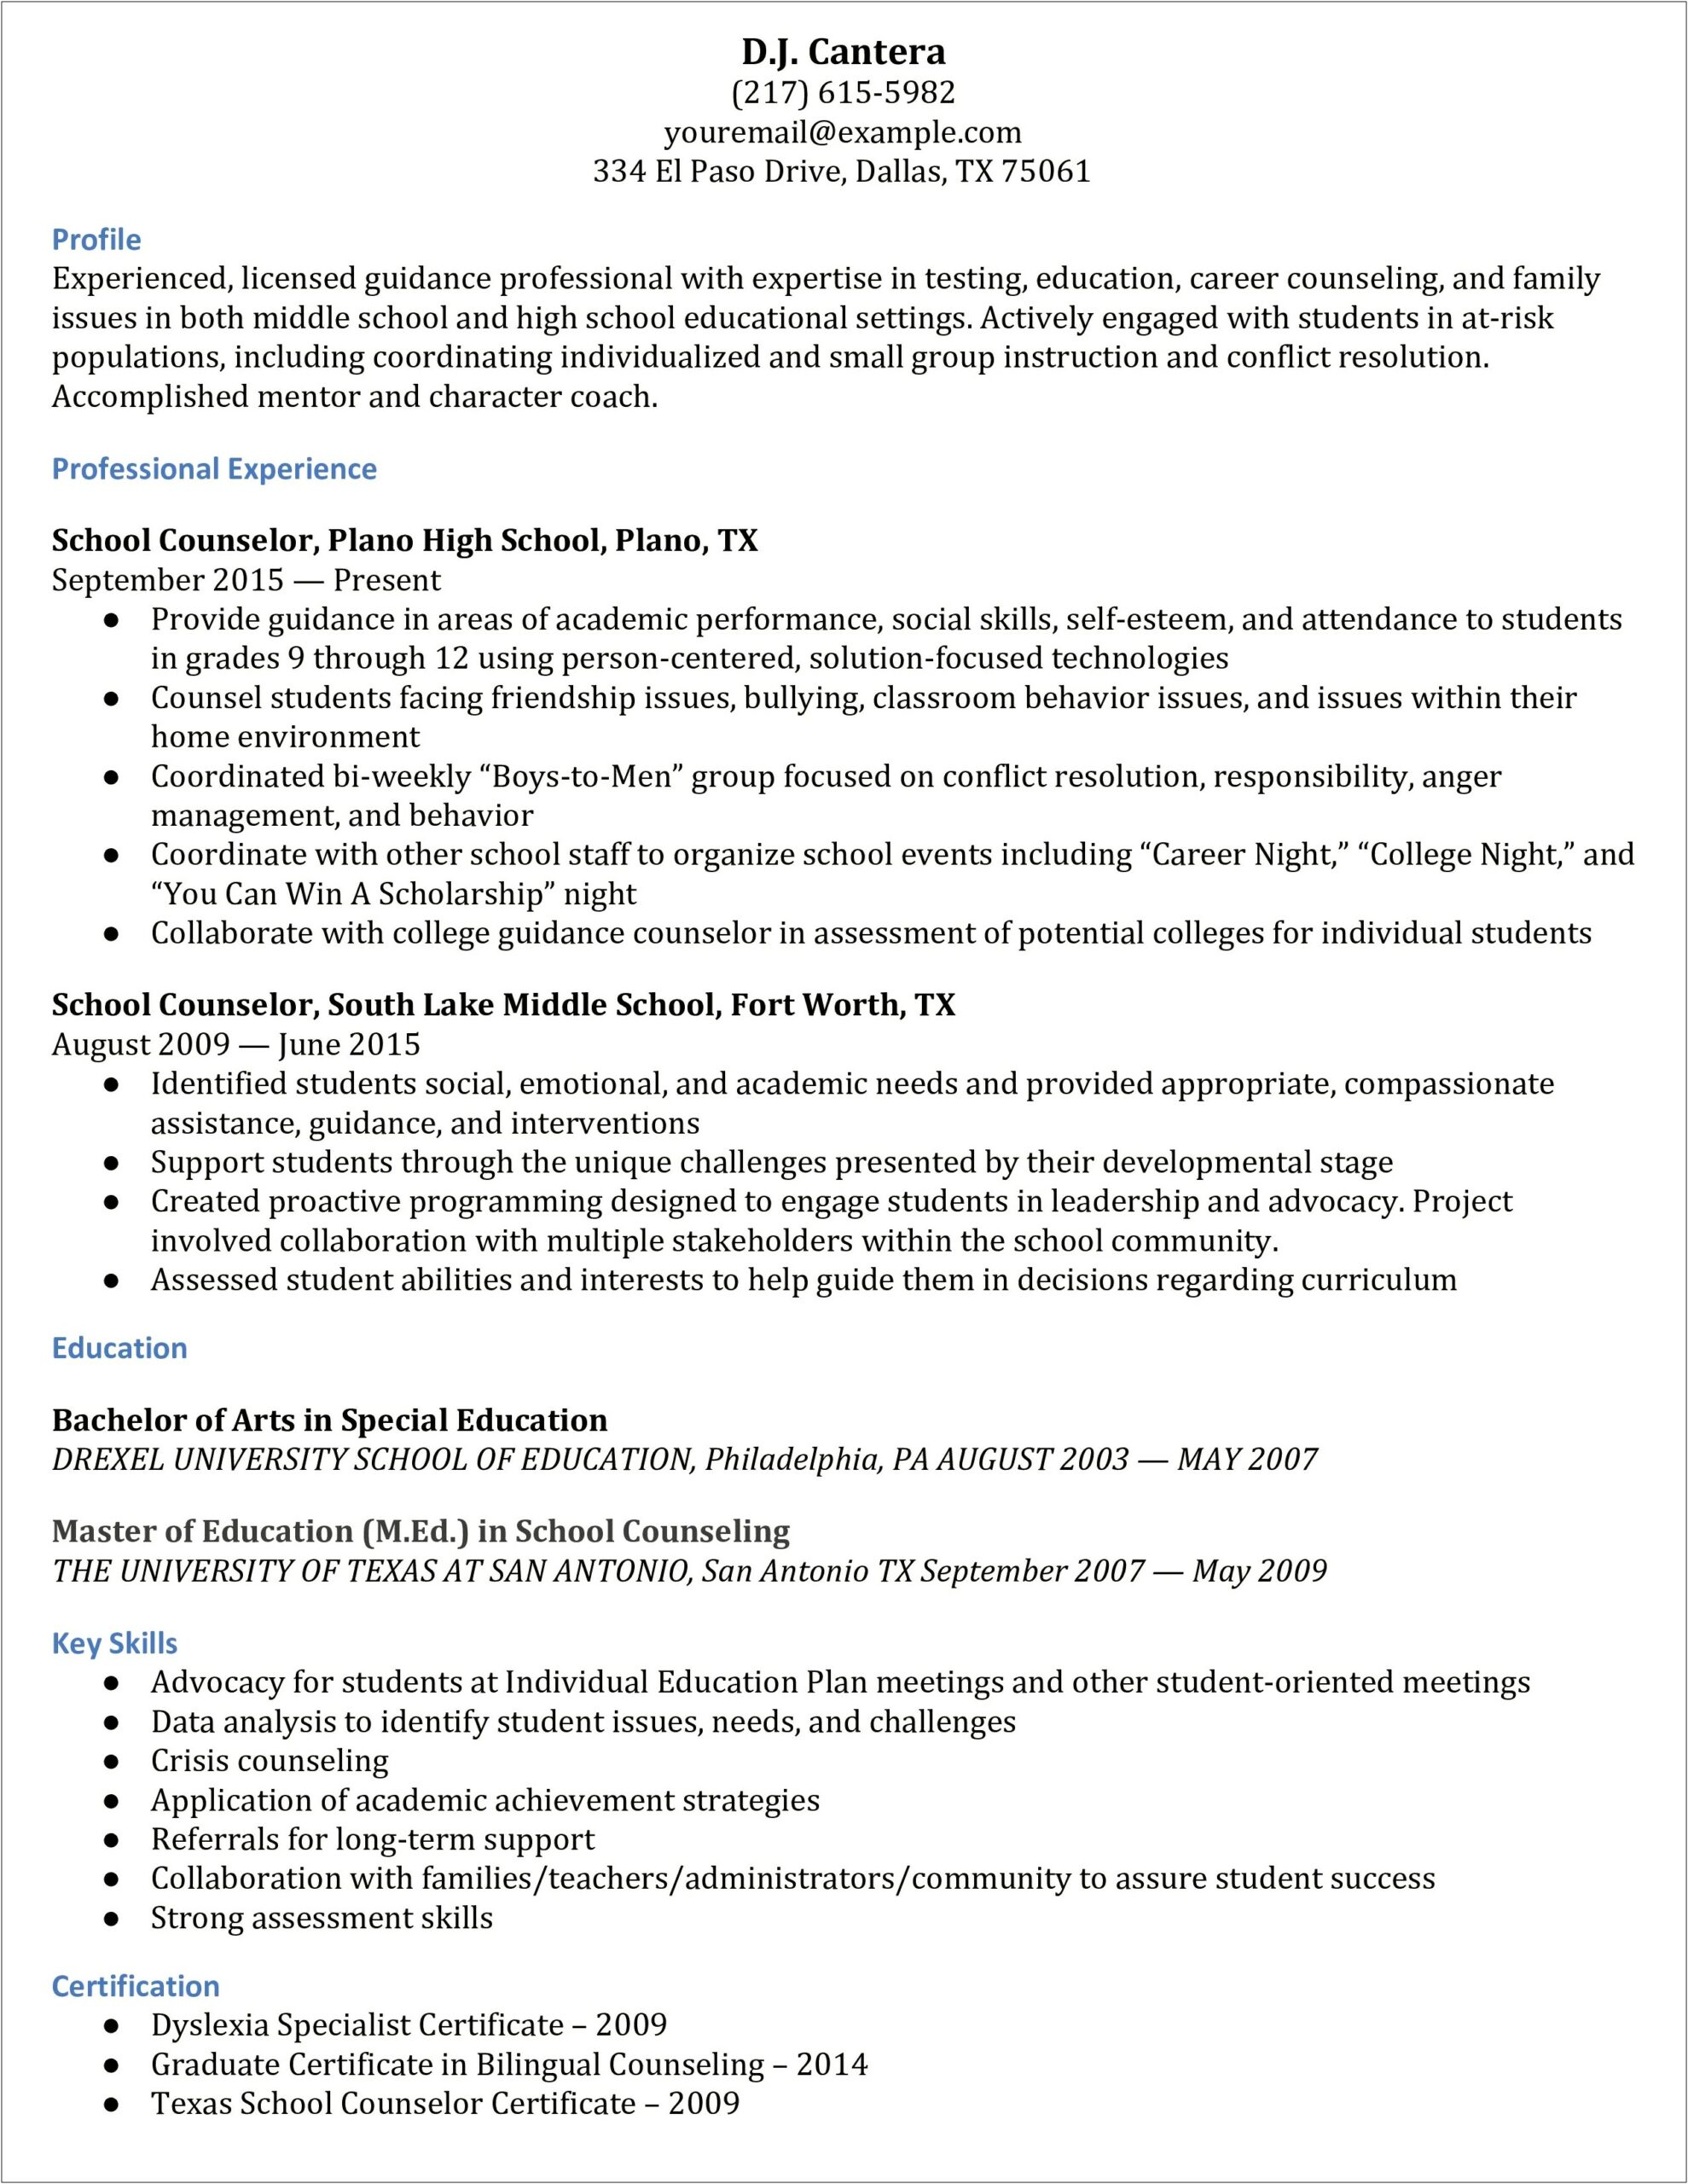 Career Counselor Job Description For Resume